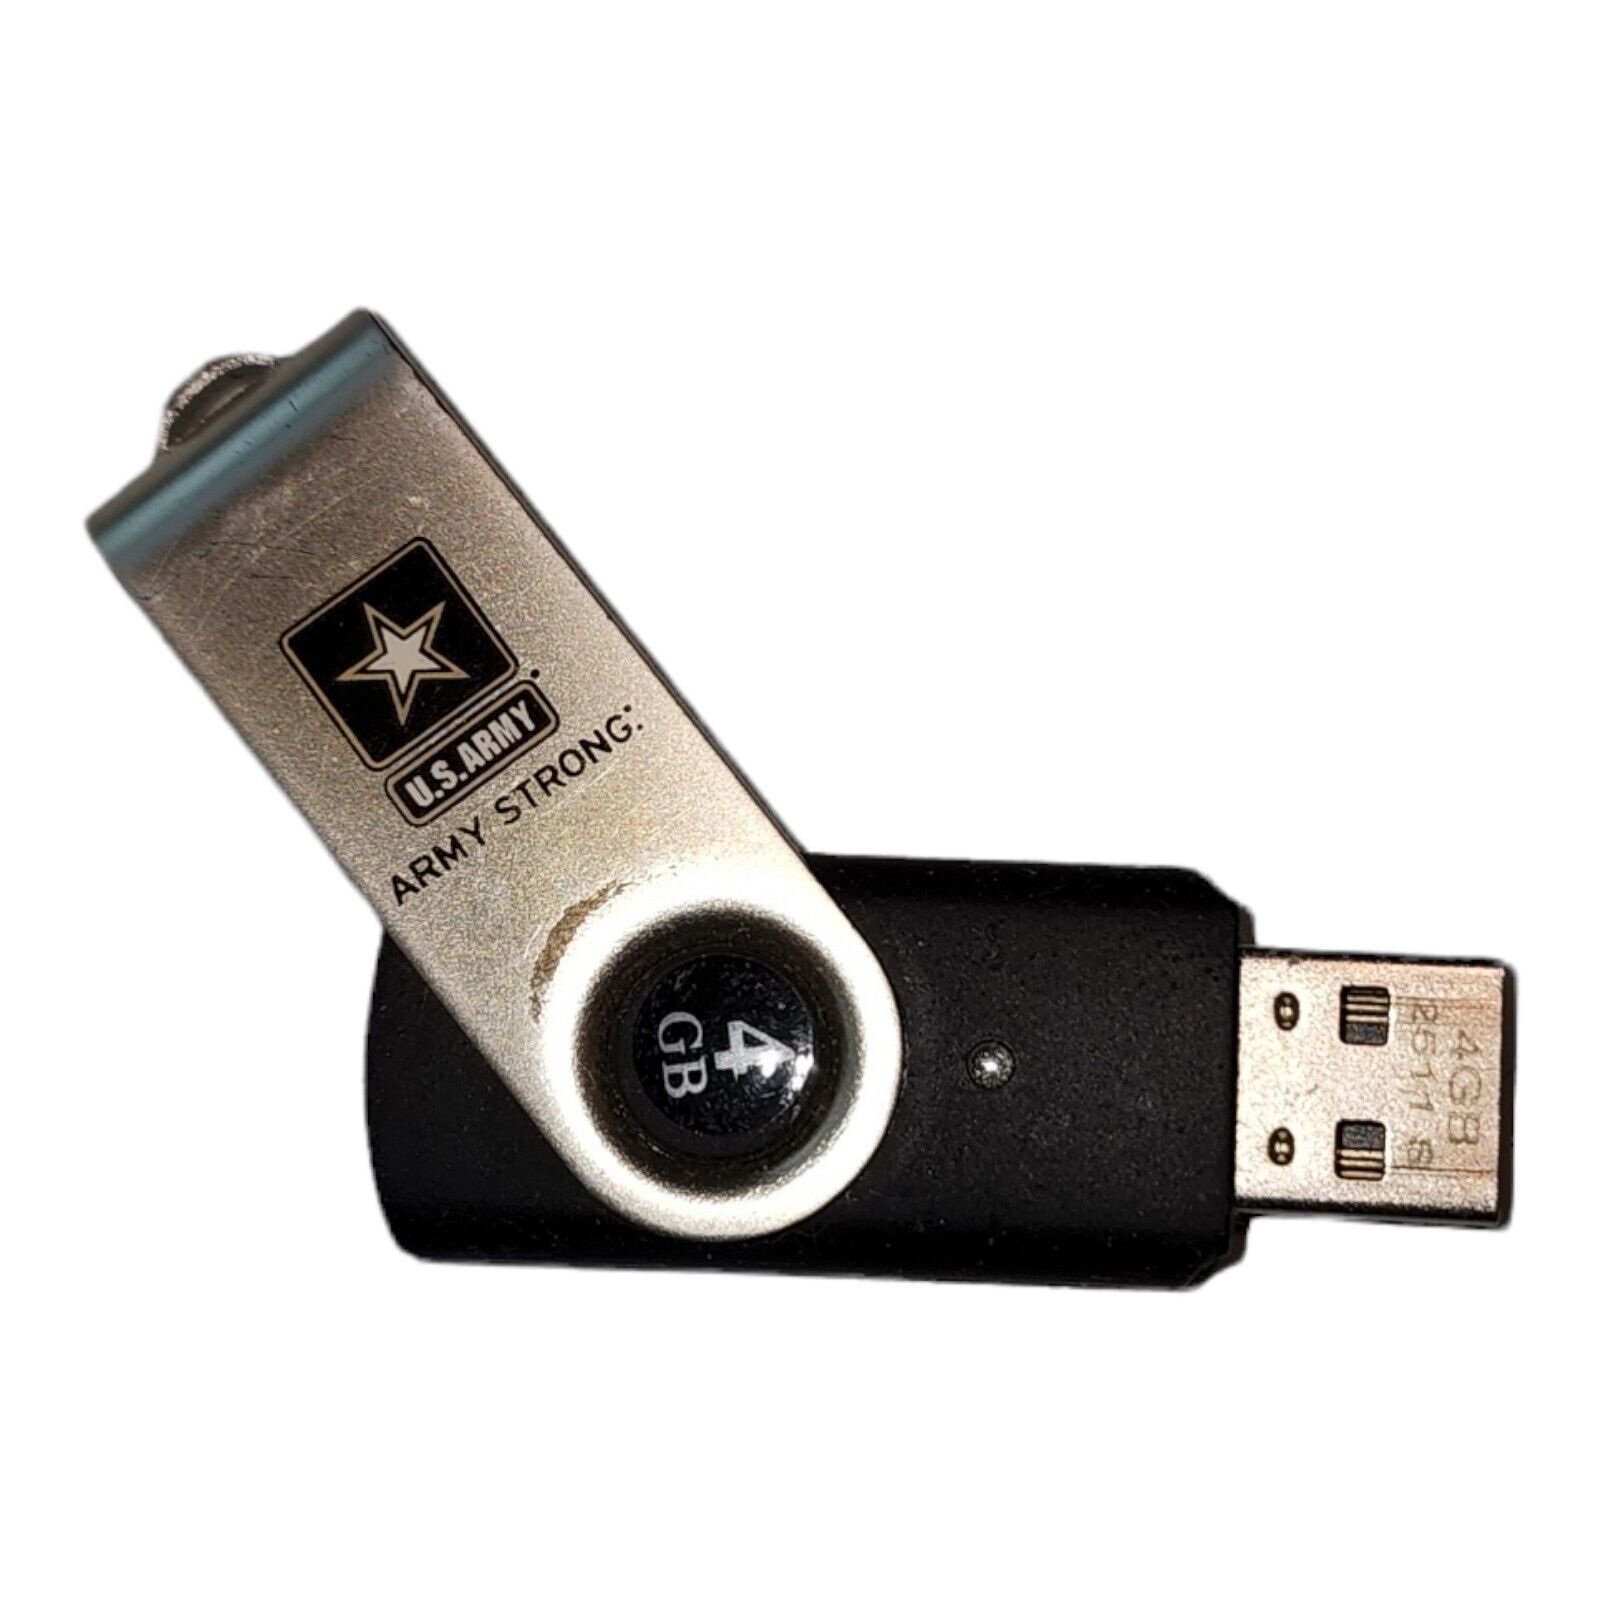 US Army Flash Thumb Drive 4 GB Silver Military USB Data Storage Drive